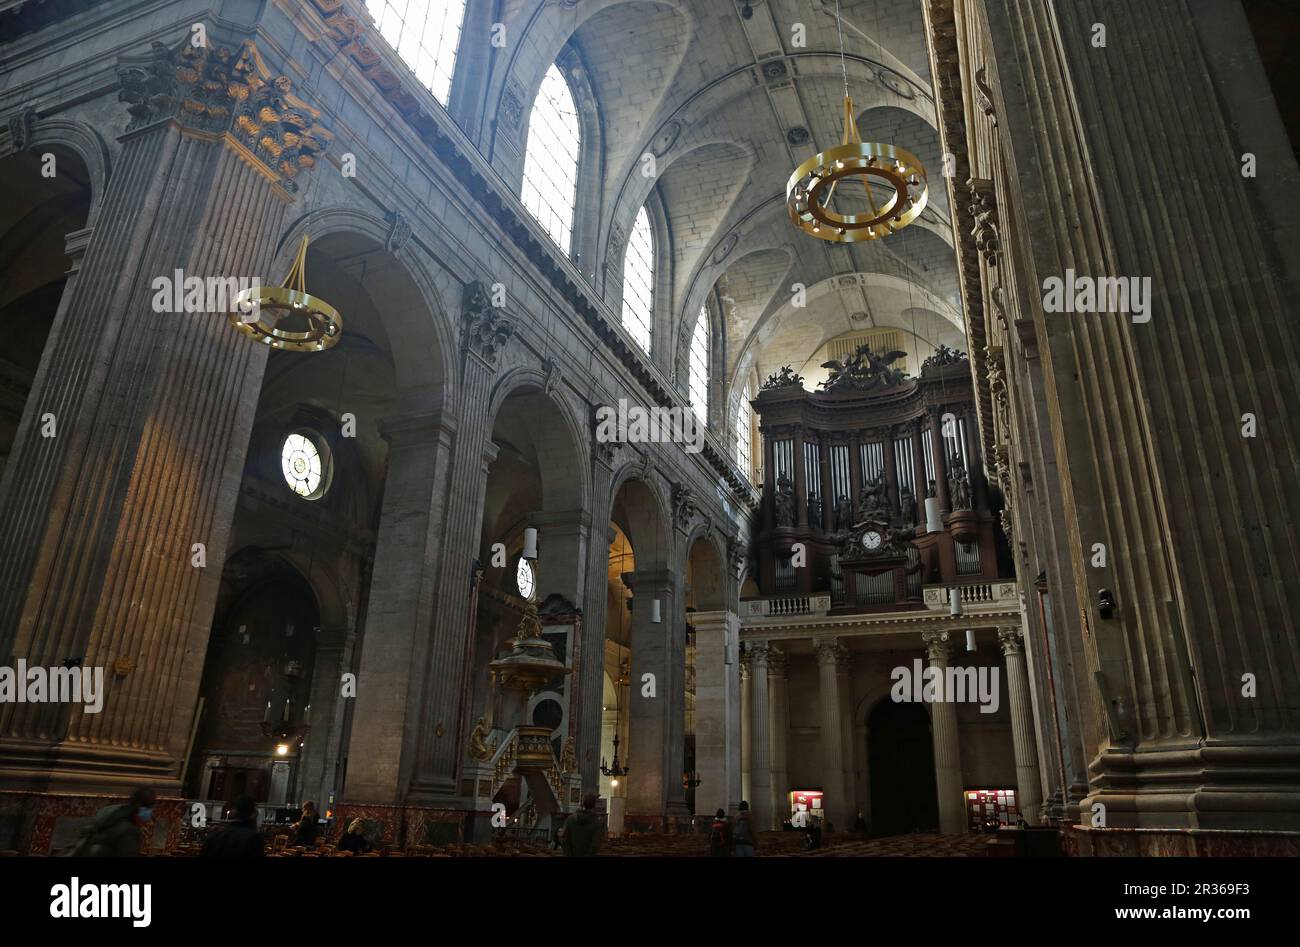 Main nave and the organ - Saint-Sulpice - Paris, France Stock Photo